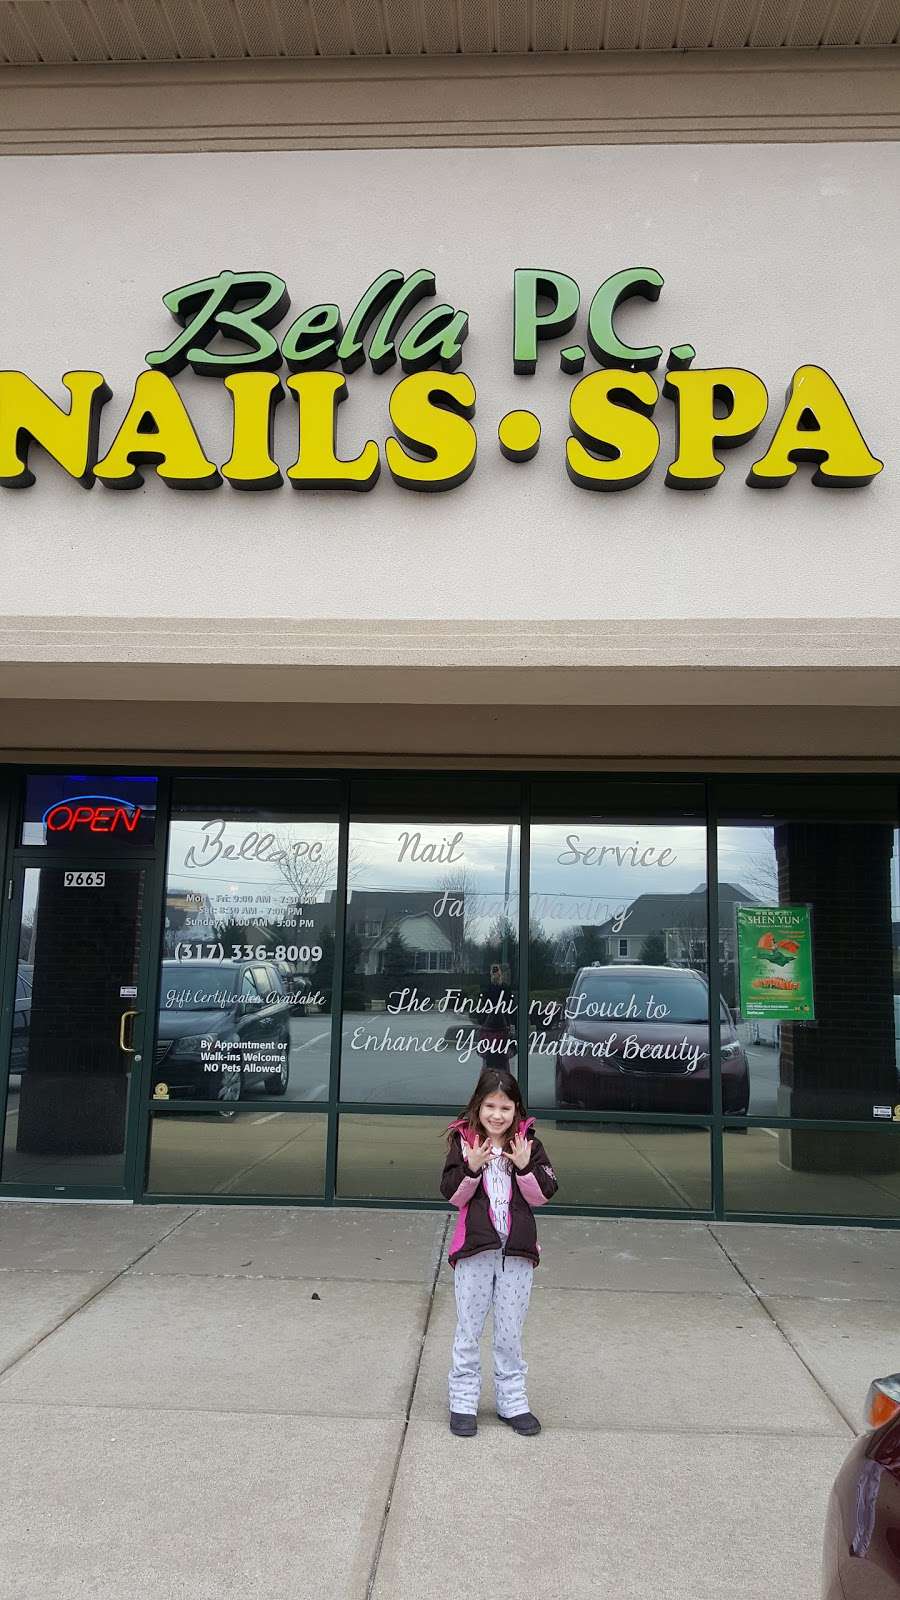 Bella P.C Nails & Spa | 9673 Olio Rd, McCordsville, IN 46055 | Phone: (317) 336-8009